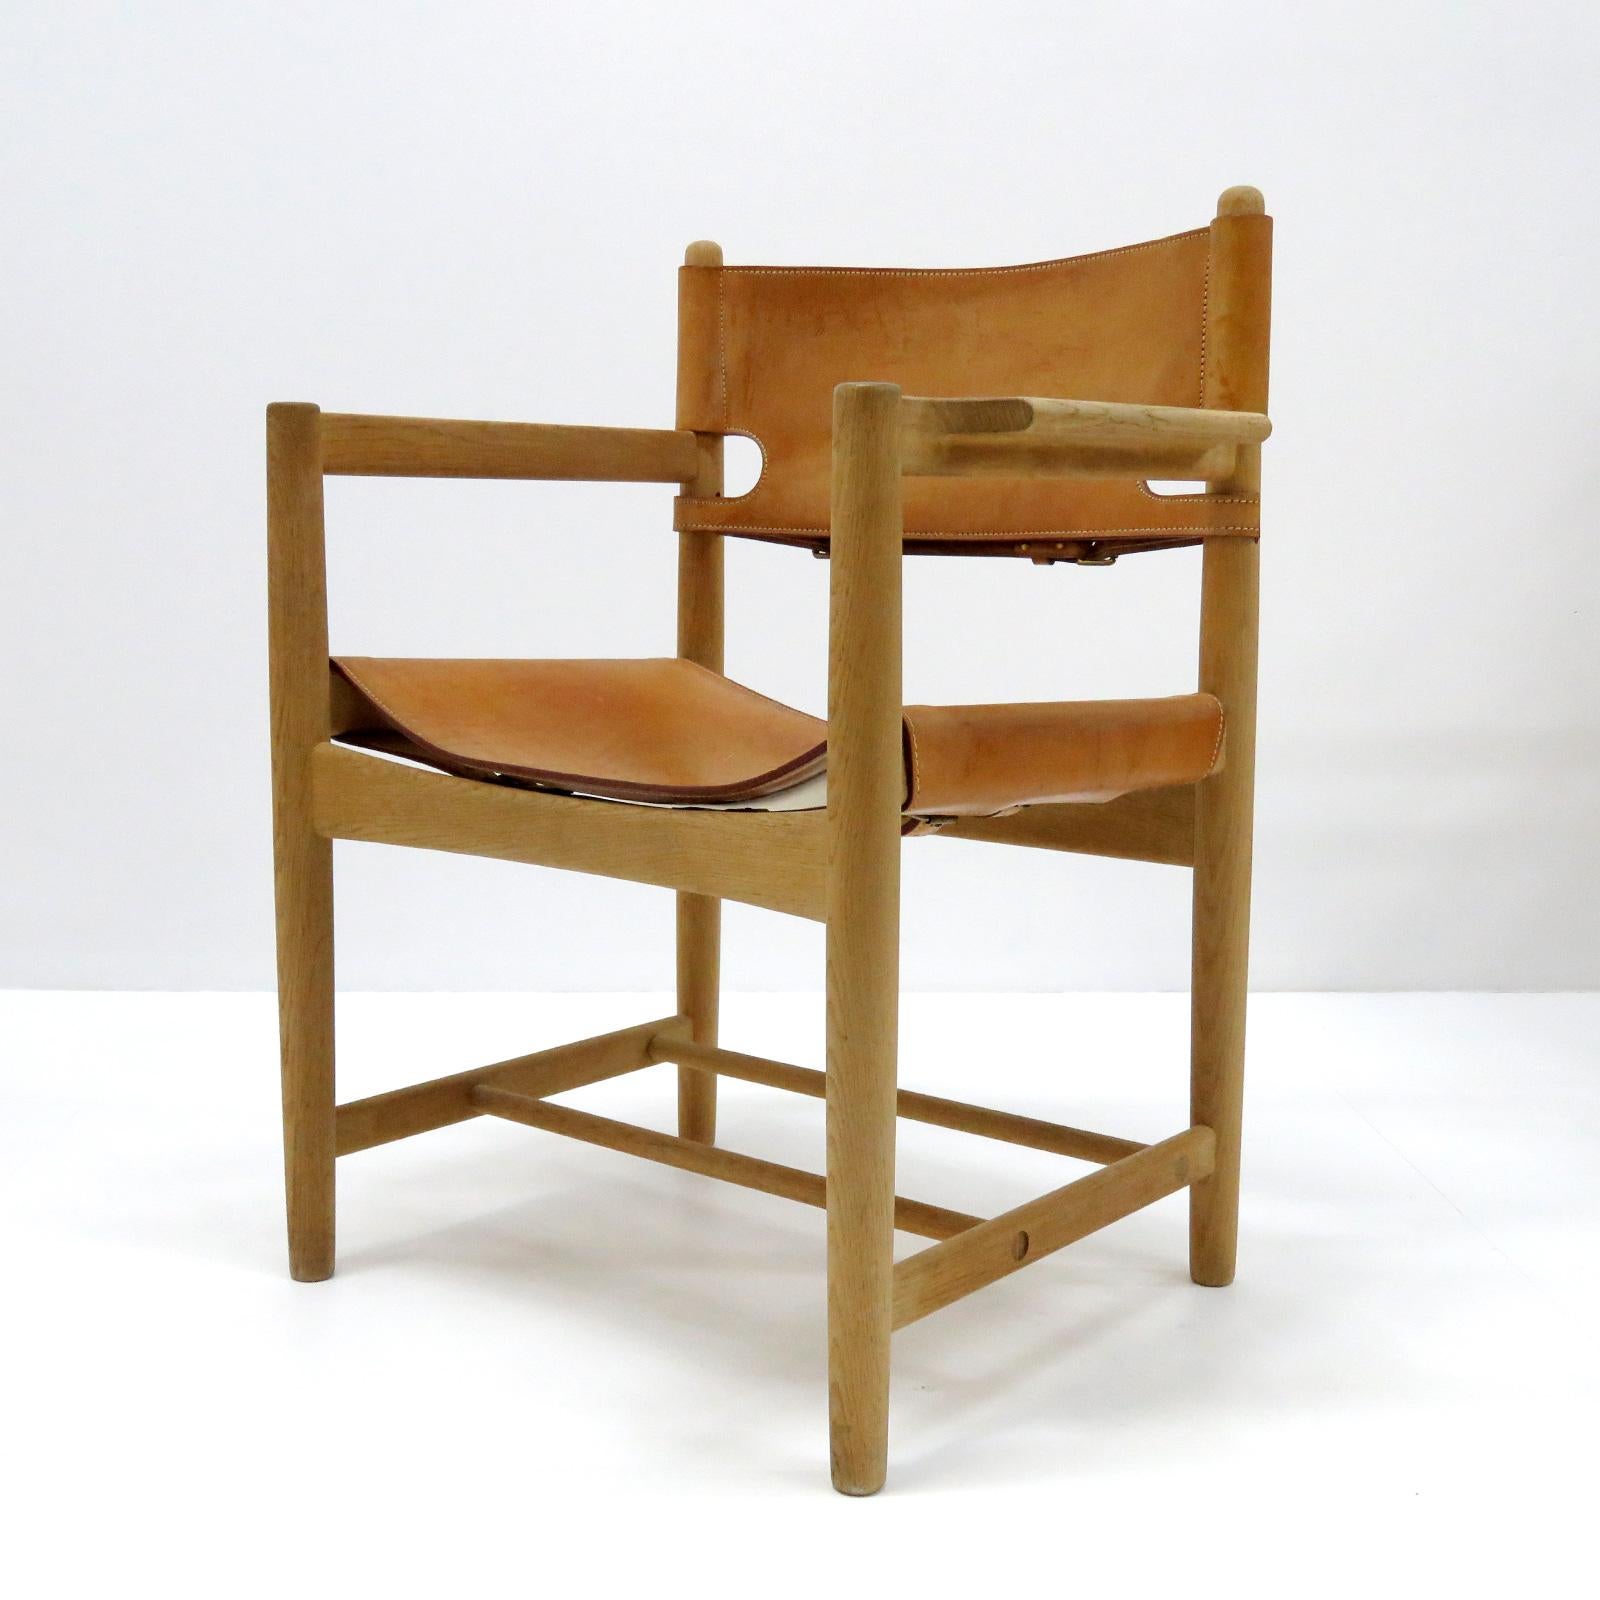 Børge Mogensen 'Hunting' Chairs, Model 3238 (Dänisch)